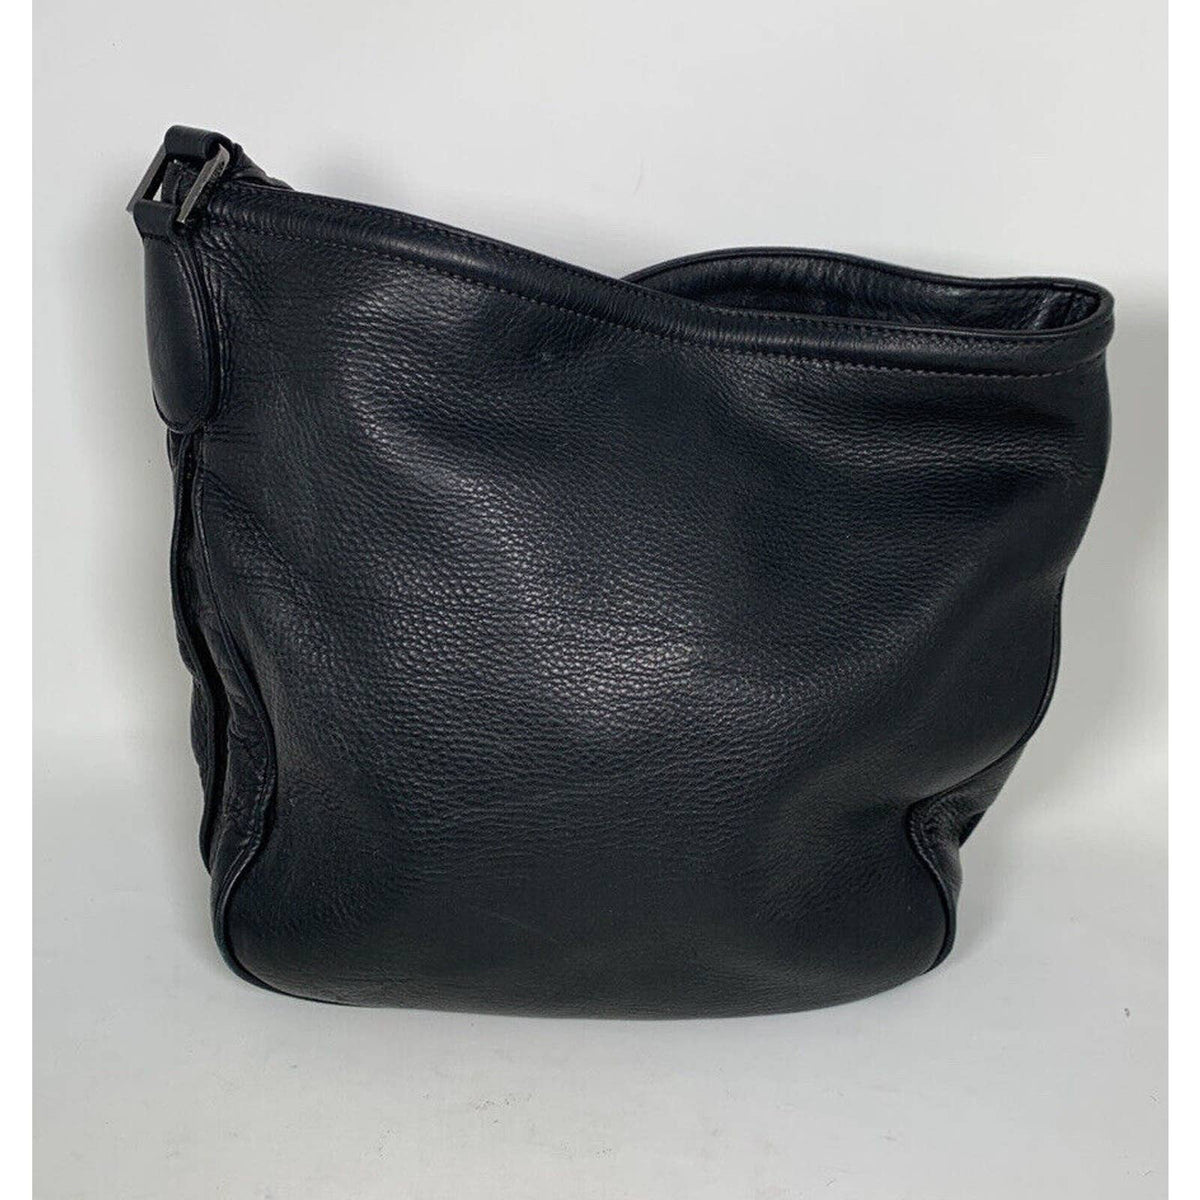 Longchamp Black Leather Hobo Purse